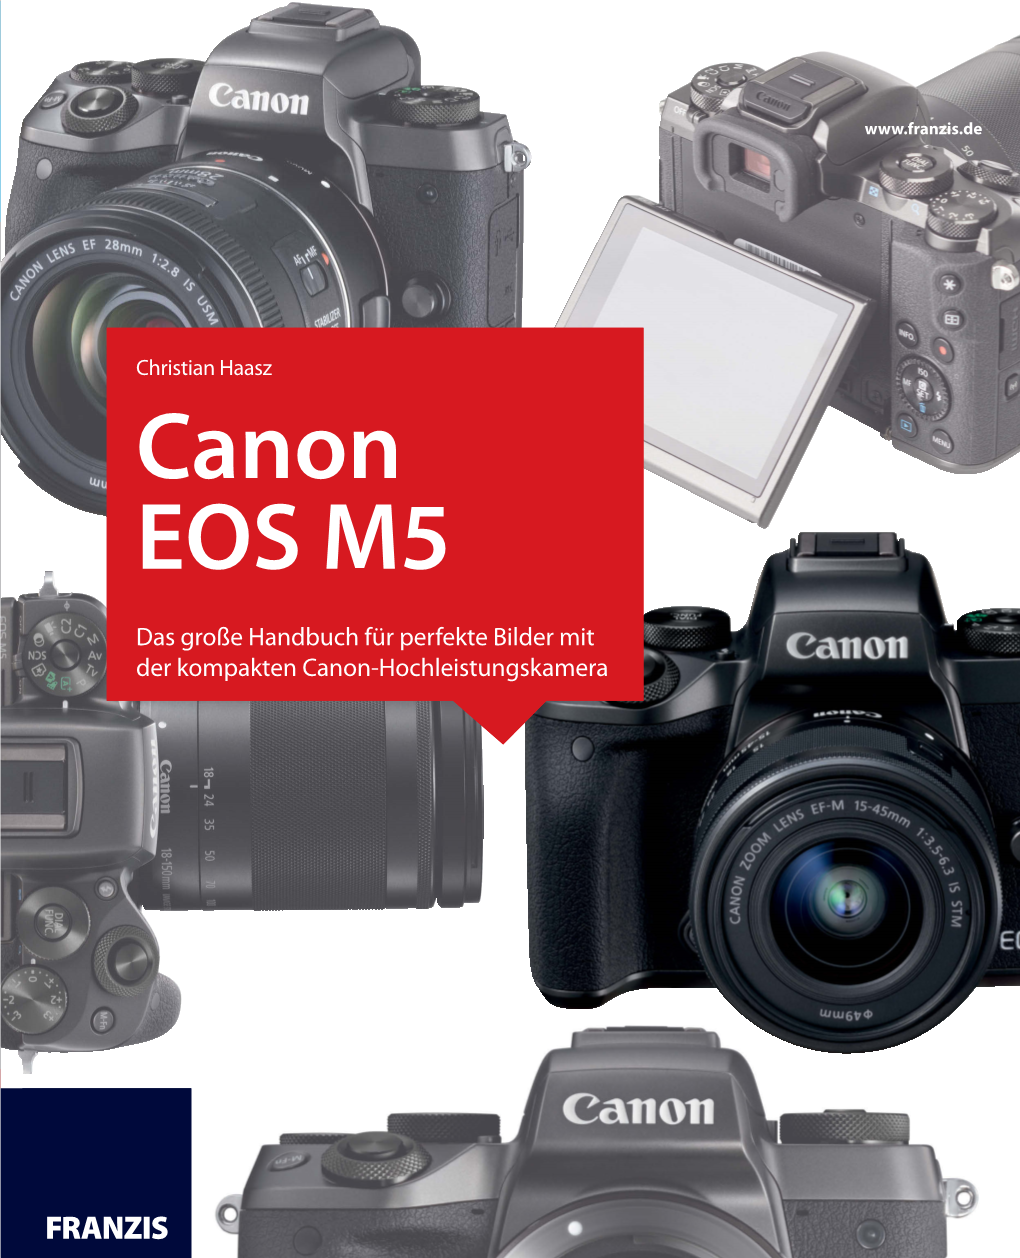 Canon EOS M5 60550-2 Titelei 21X24.Qxp X 28.06.17 11:55 Seite 3